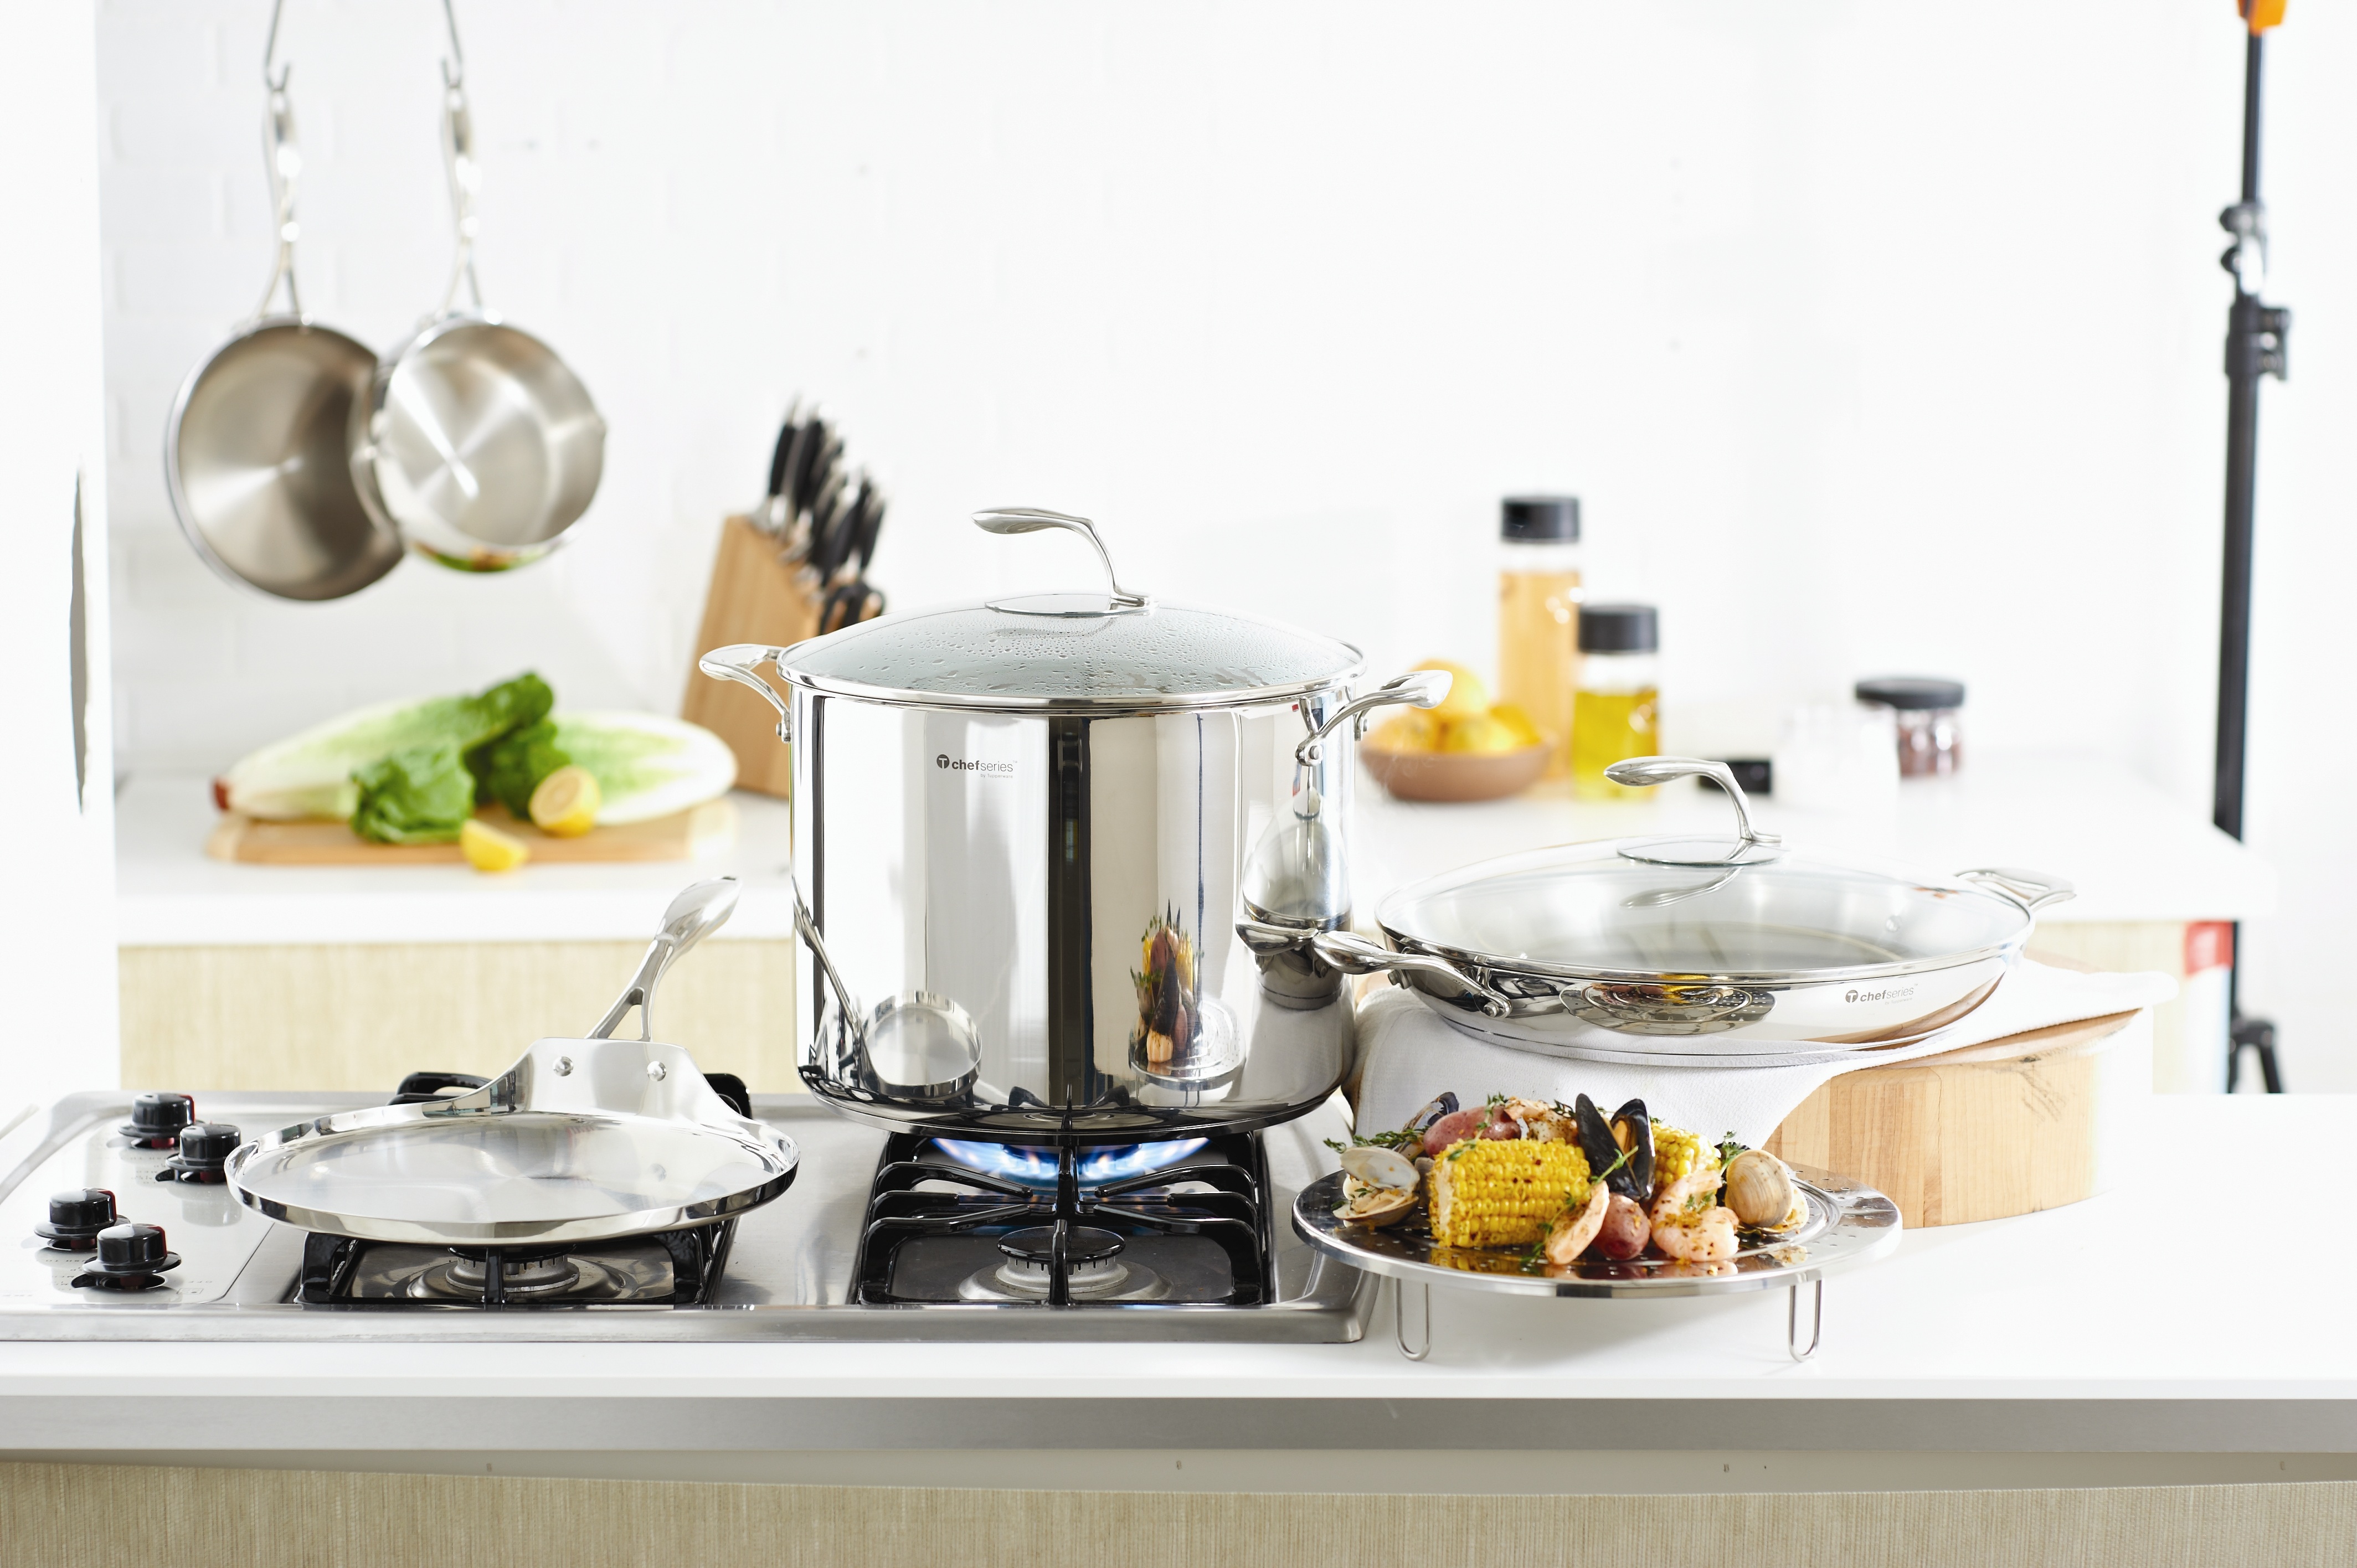 Indsigtsfuld brugerdefinerede Grunde Giveaway: Tupperware Chef Series 12” Griddle Pan - My Judy the Foodie